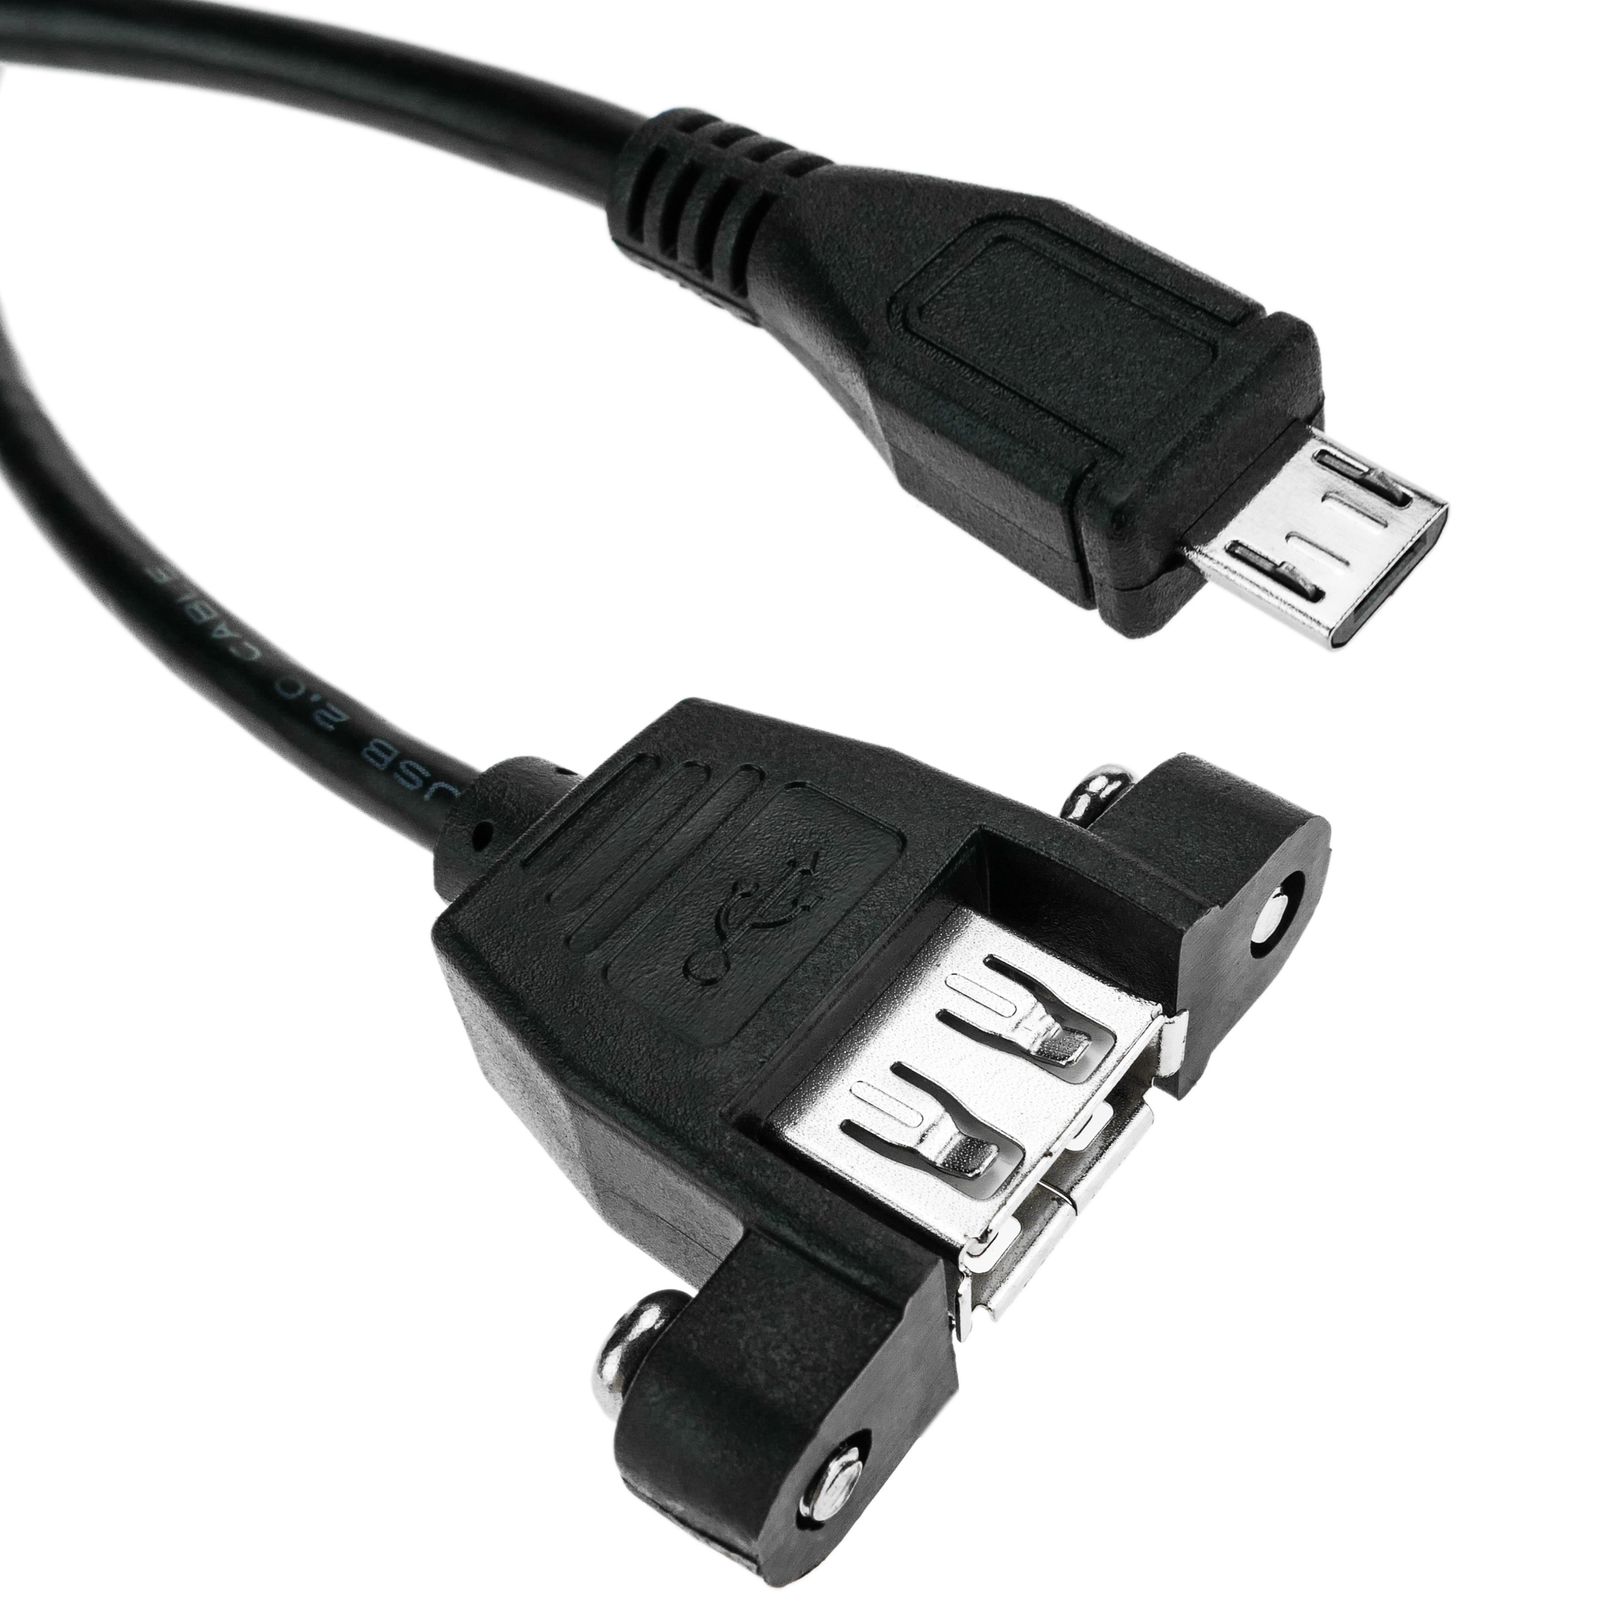 Cable adaptador auriculares USB 2.0 tipo C macho a minijack 3.5mm hembra  12cm - Cablematic